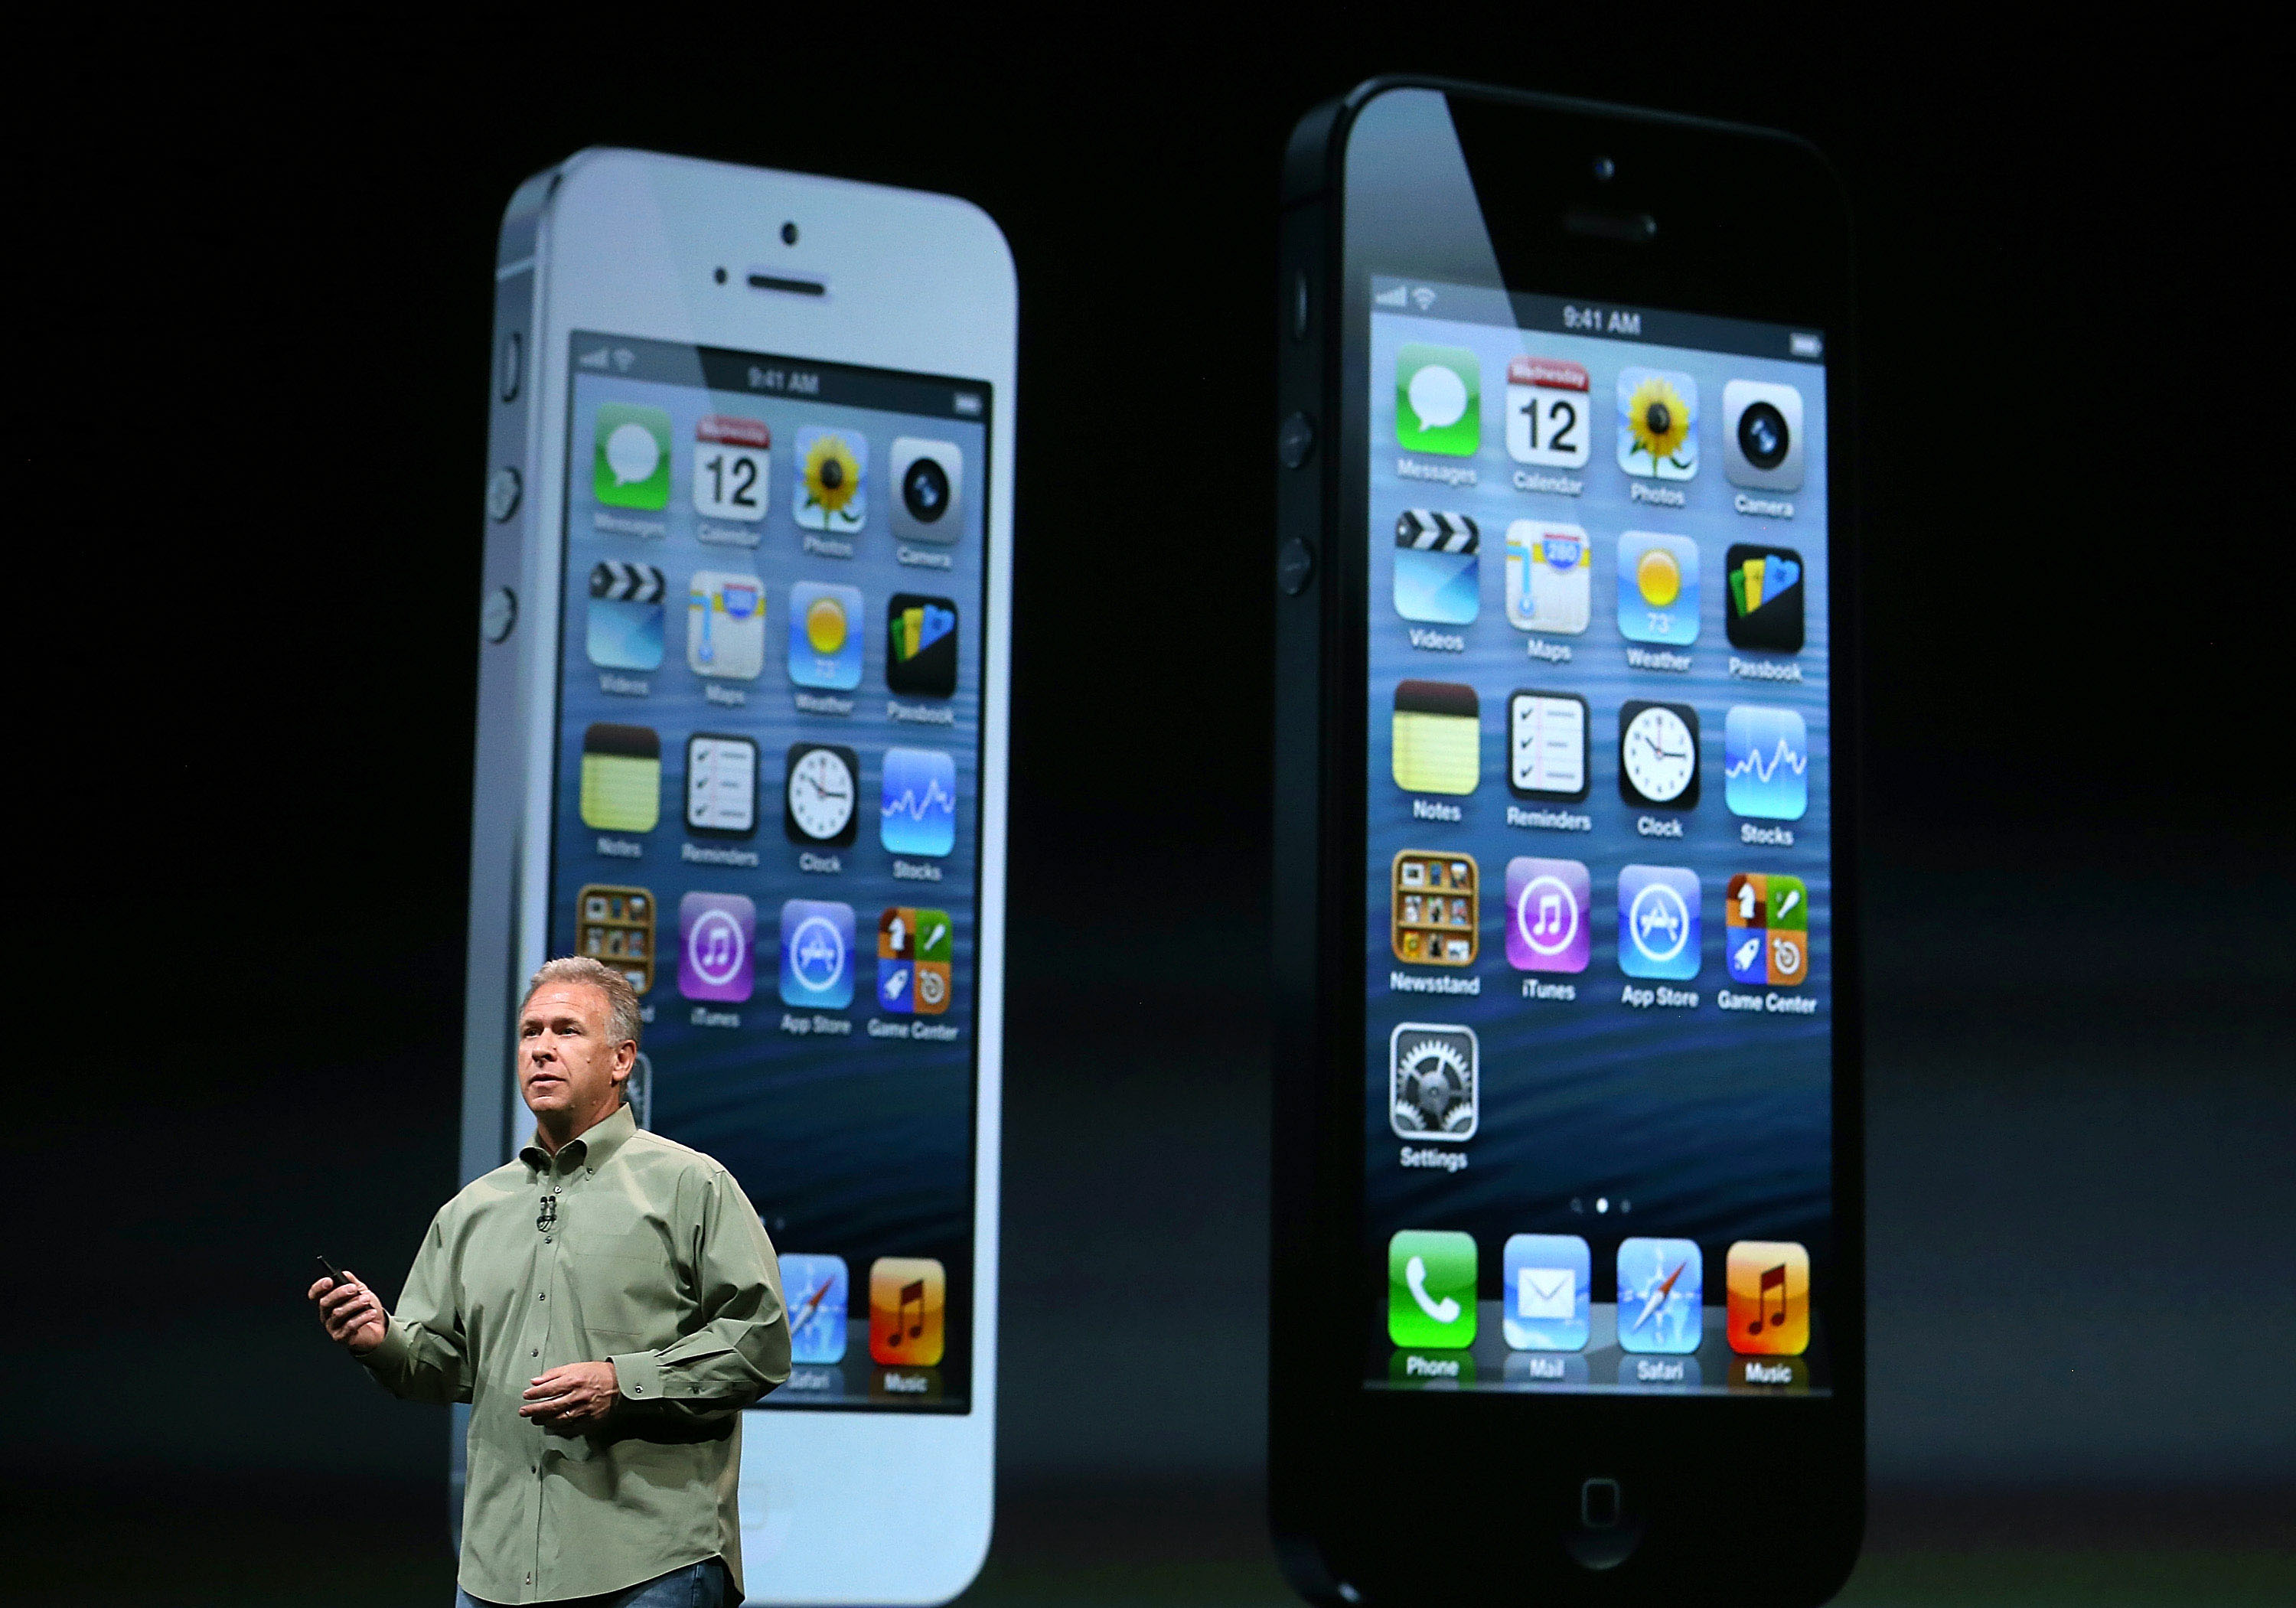 iPhone 5 - 2012